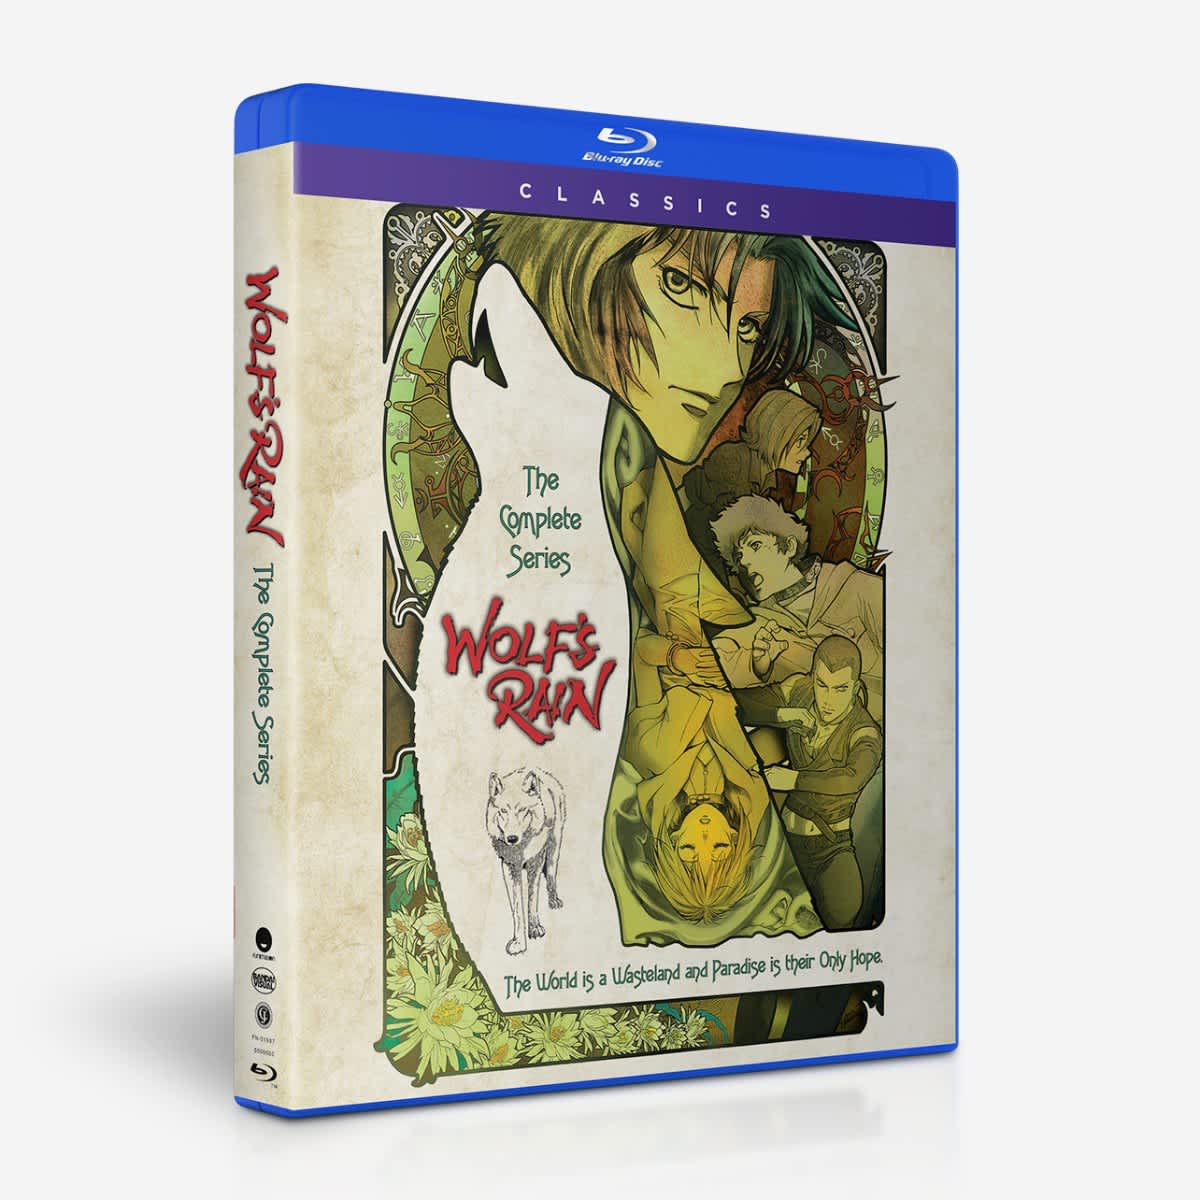 Wolf's Rain - The Complete Series - Classics - Blu-ray ...